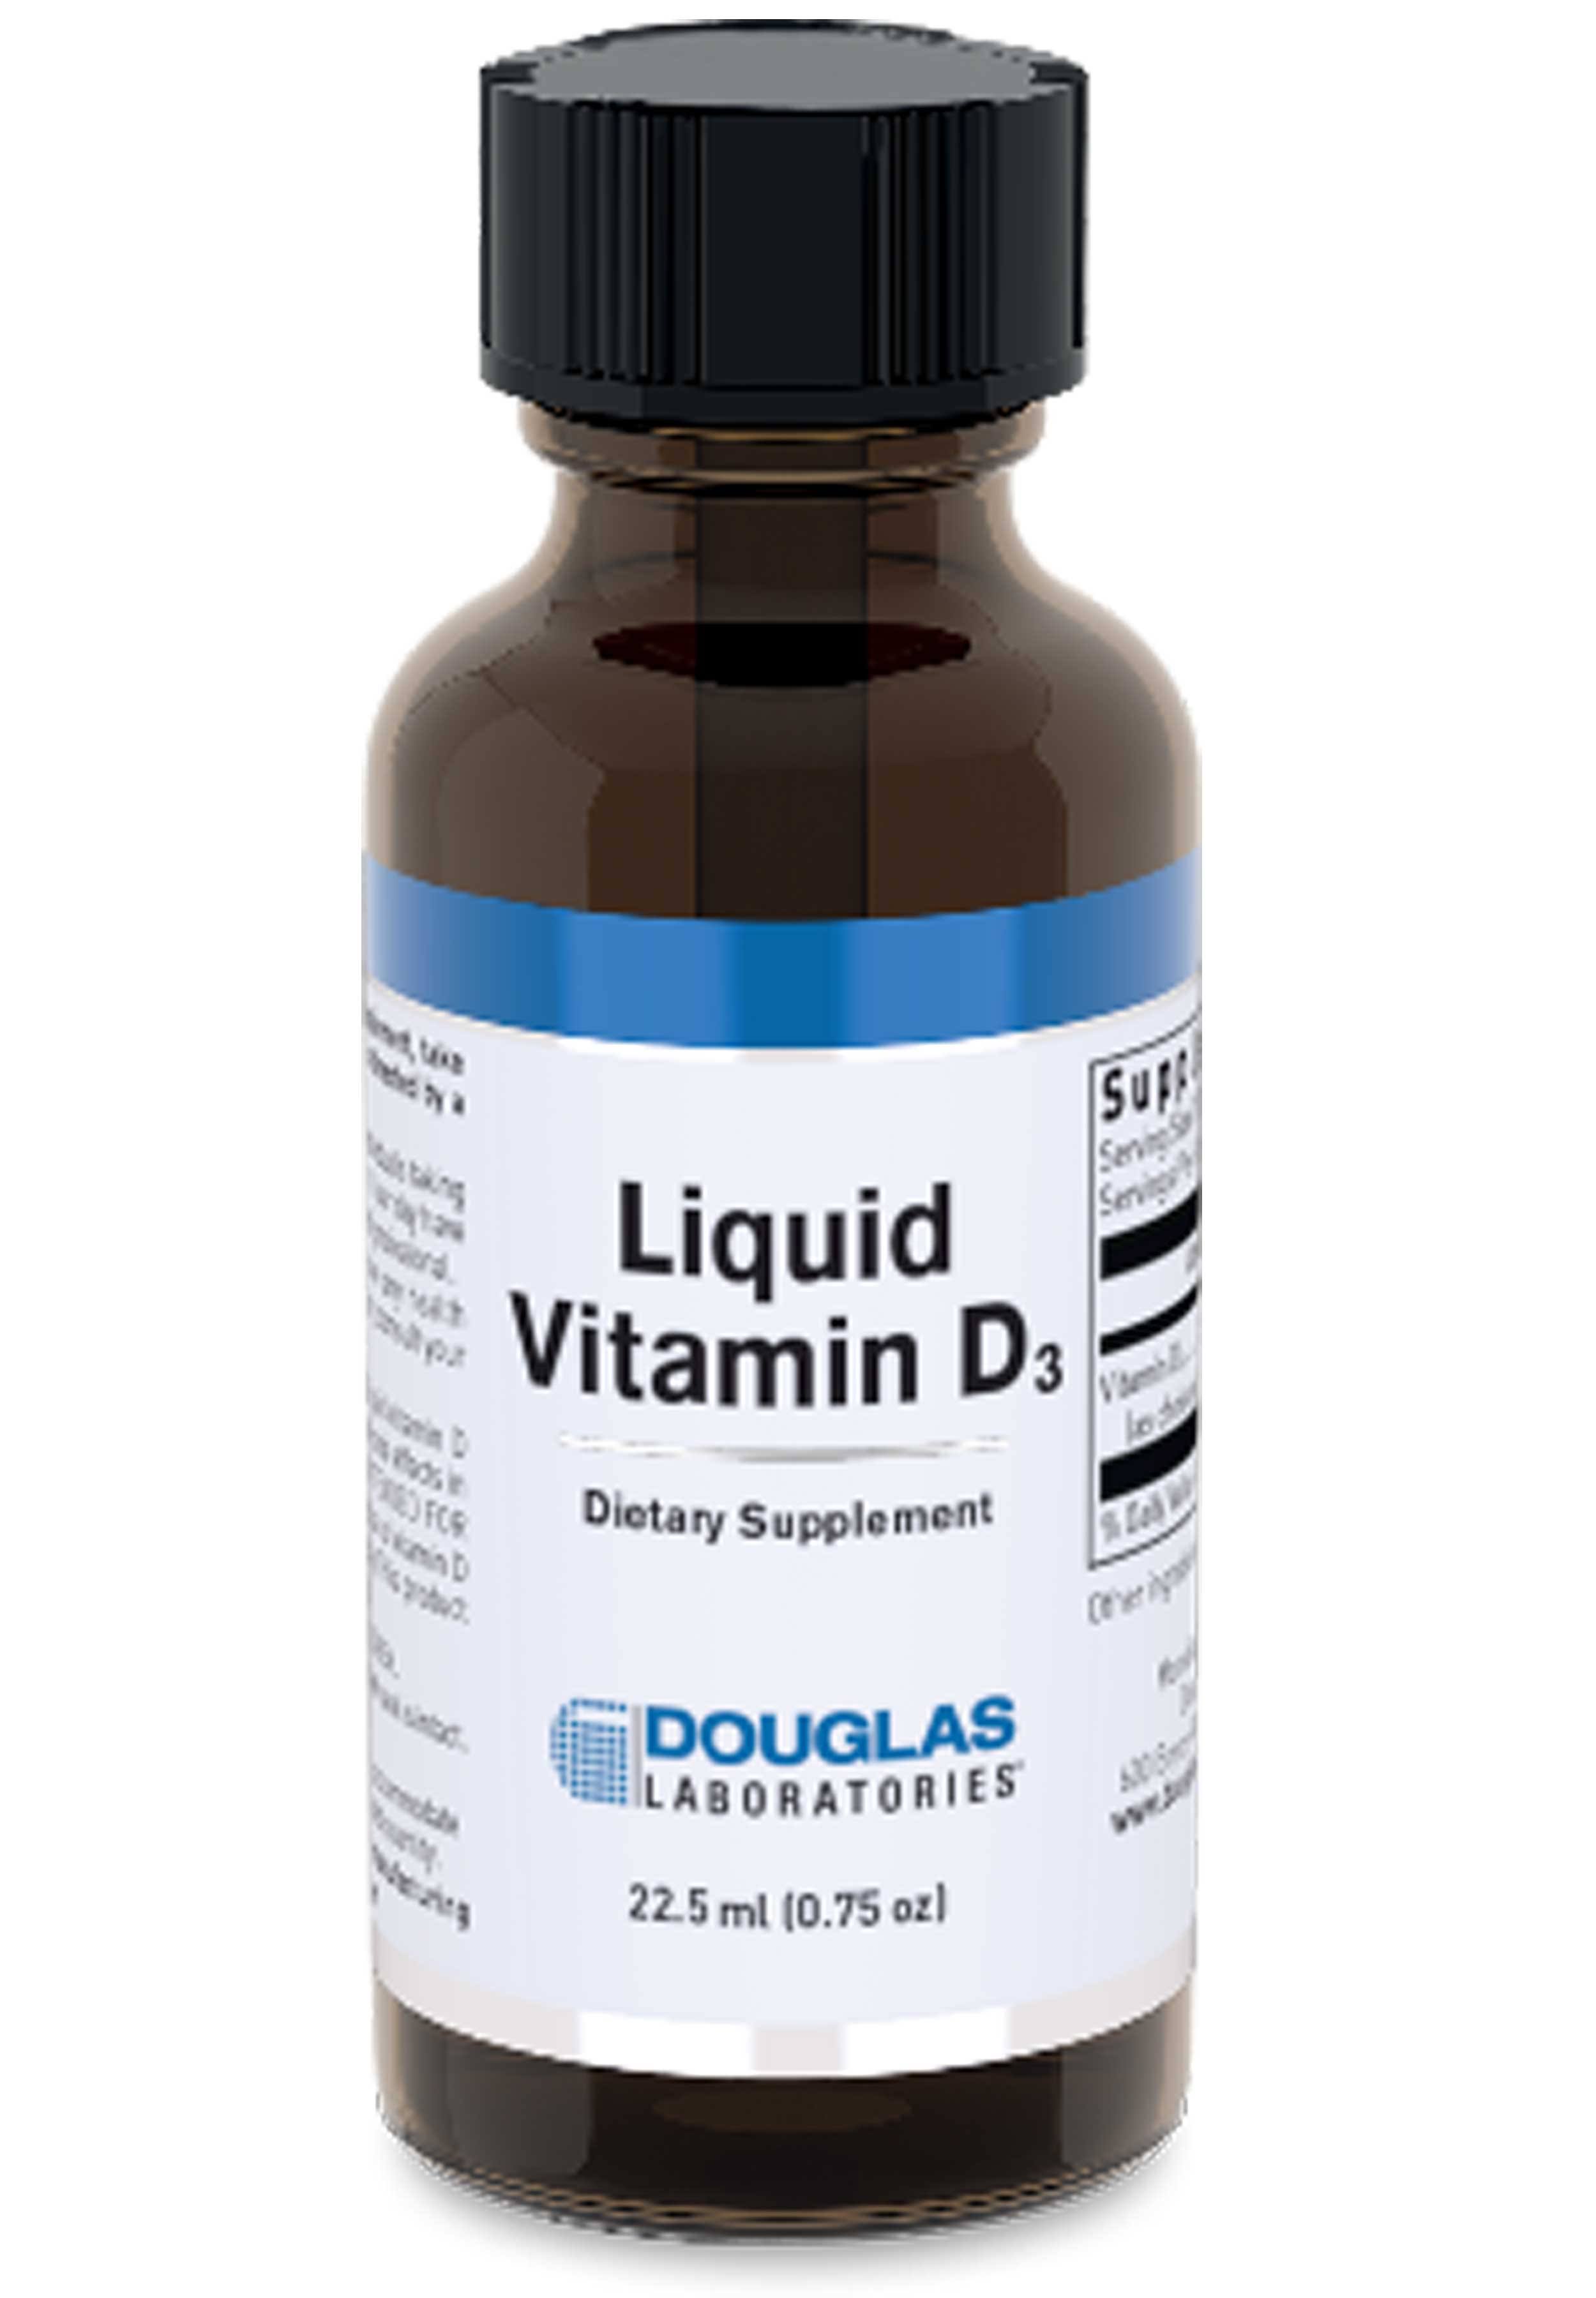 Douglas Laboratories , Liquid Vitamin D3 22.5 ml